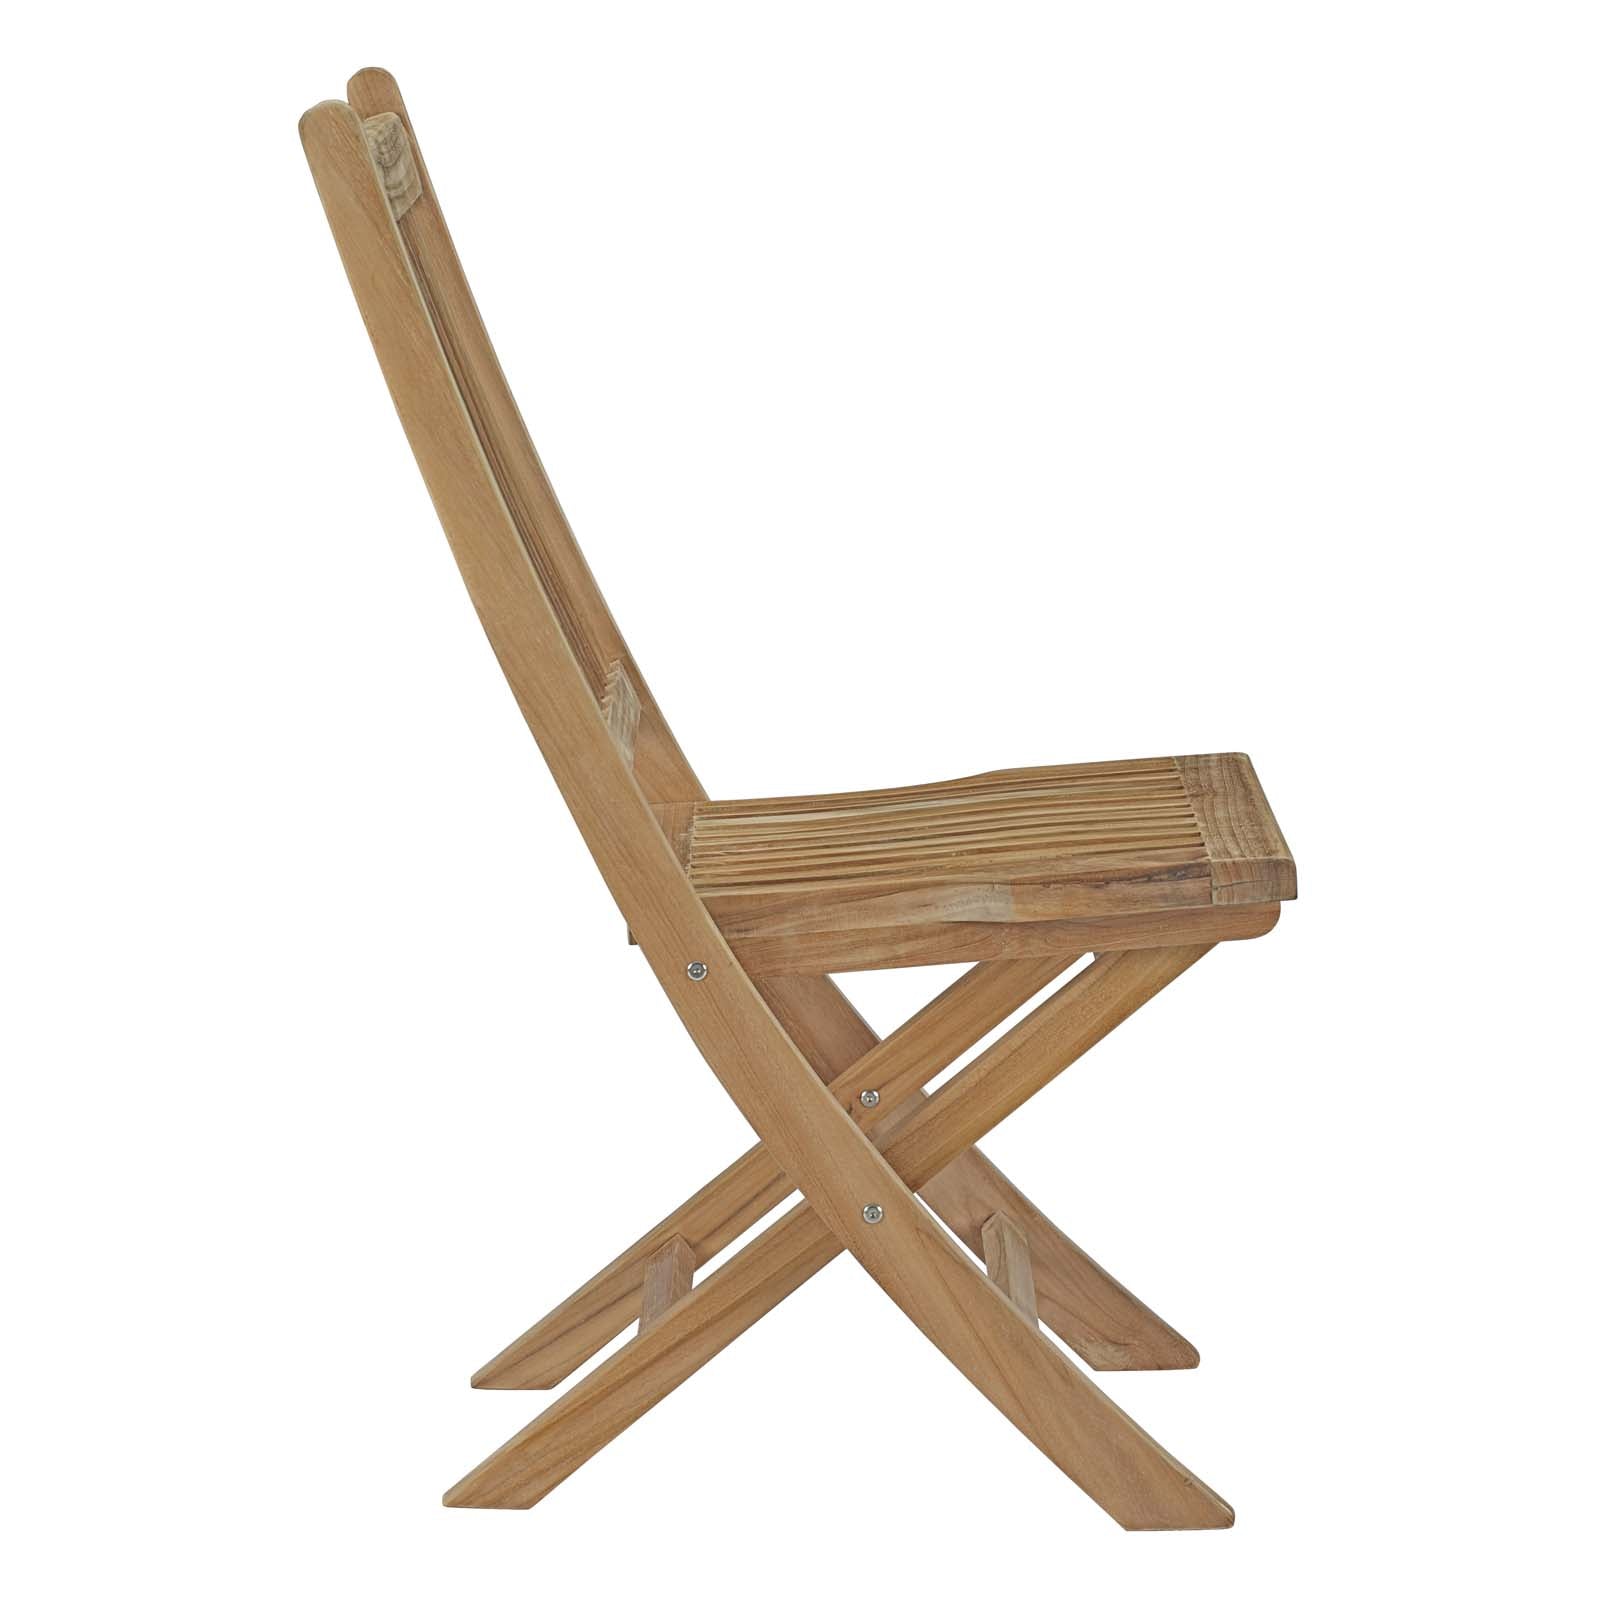 Marina Outdoor Patio Teak Folding Chair-Outdoor Folding Chair-Modway-Wall2Wall Furnishings